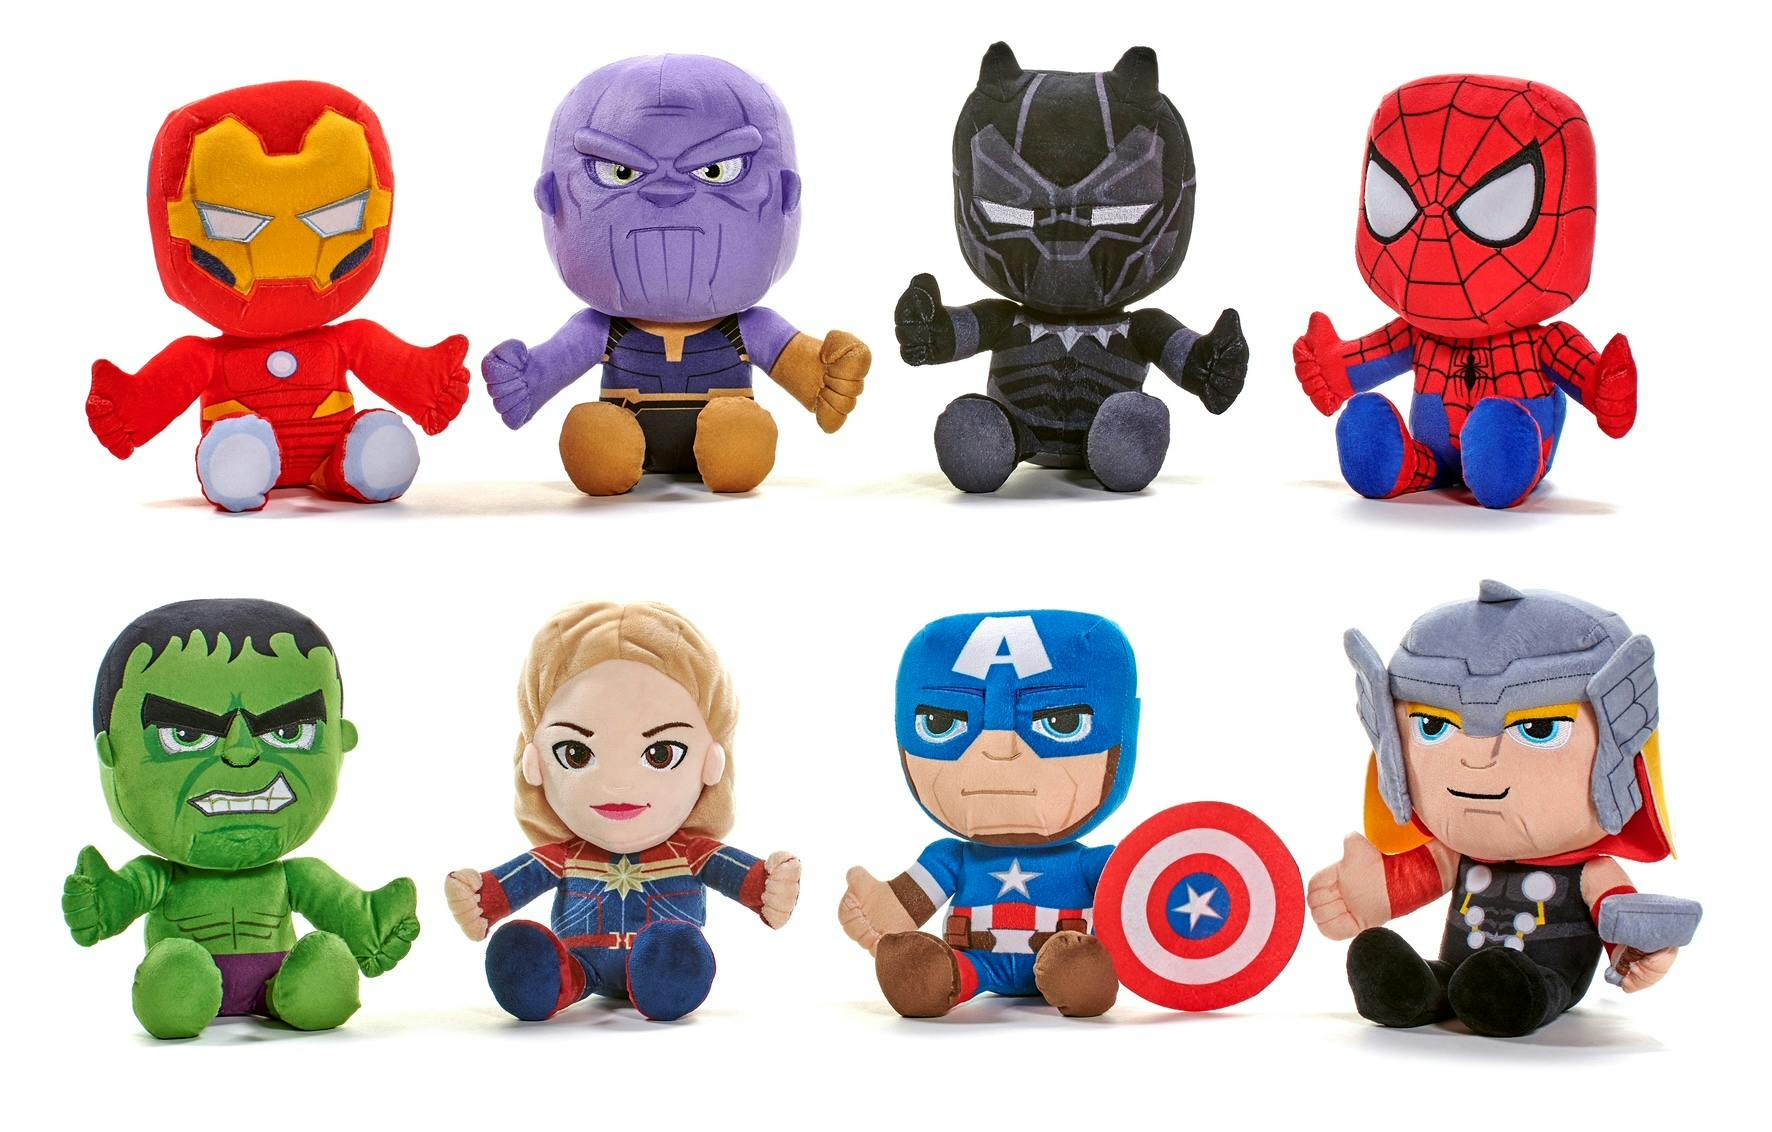 Product - Marvel Avengers